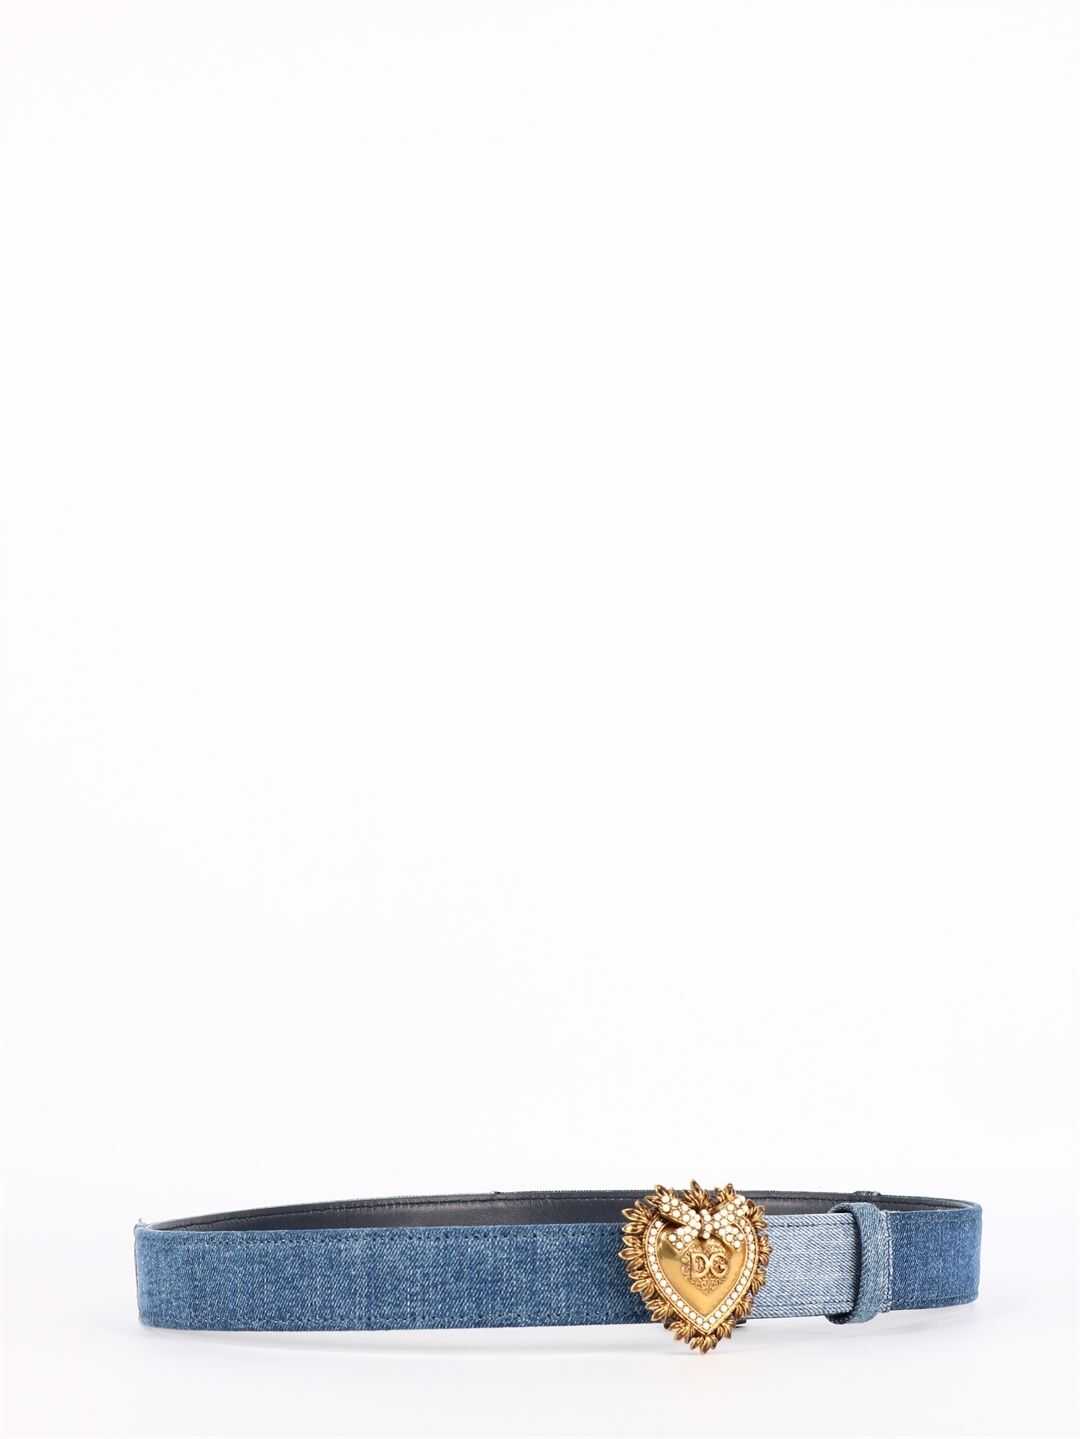 Dolce & Gabbana Devotion Denim Belt BE1315 AO621 Light blue